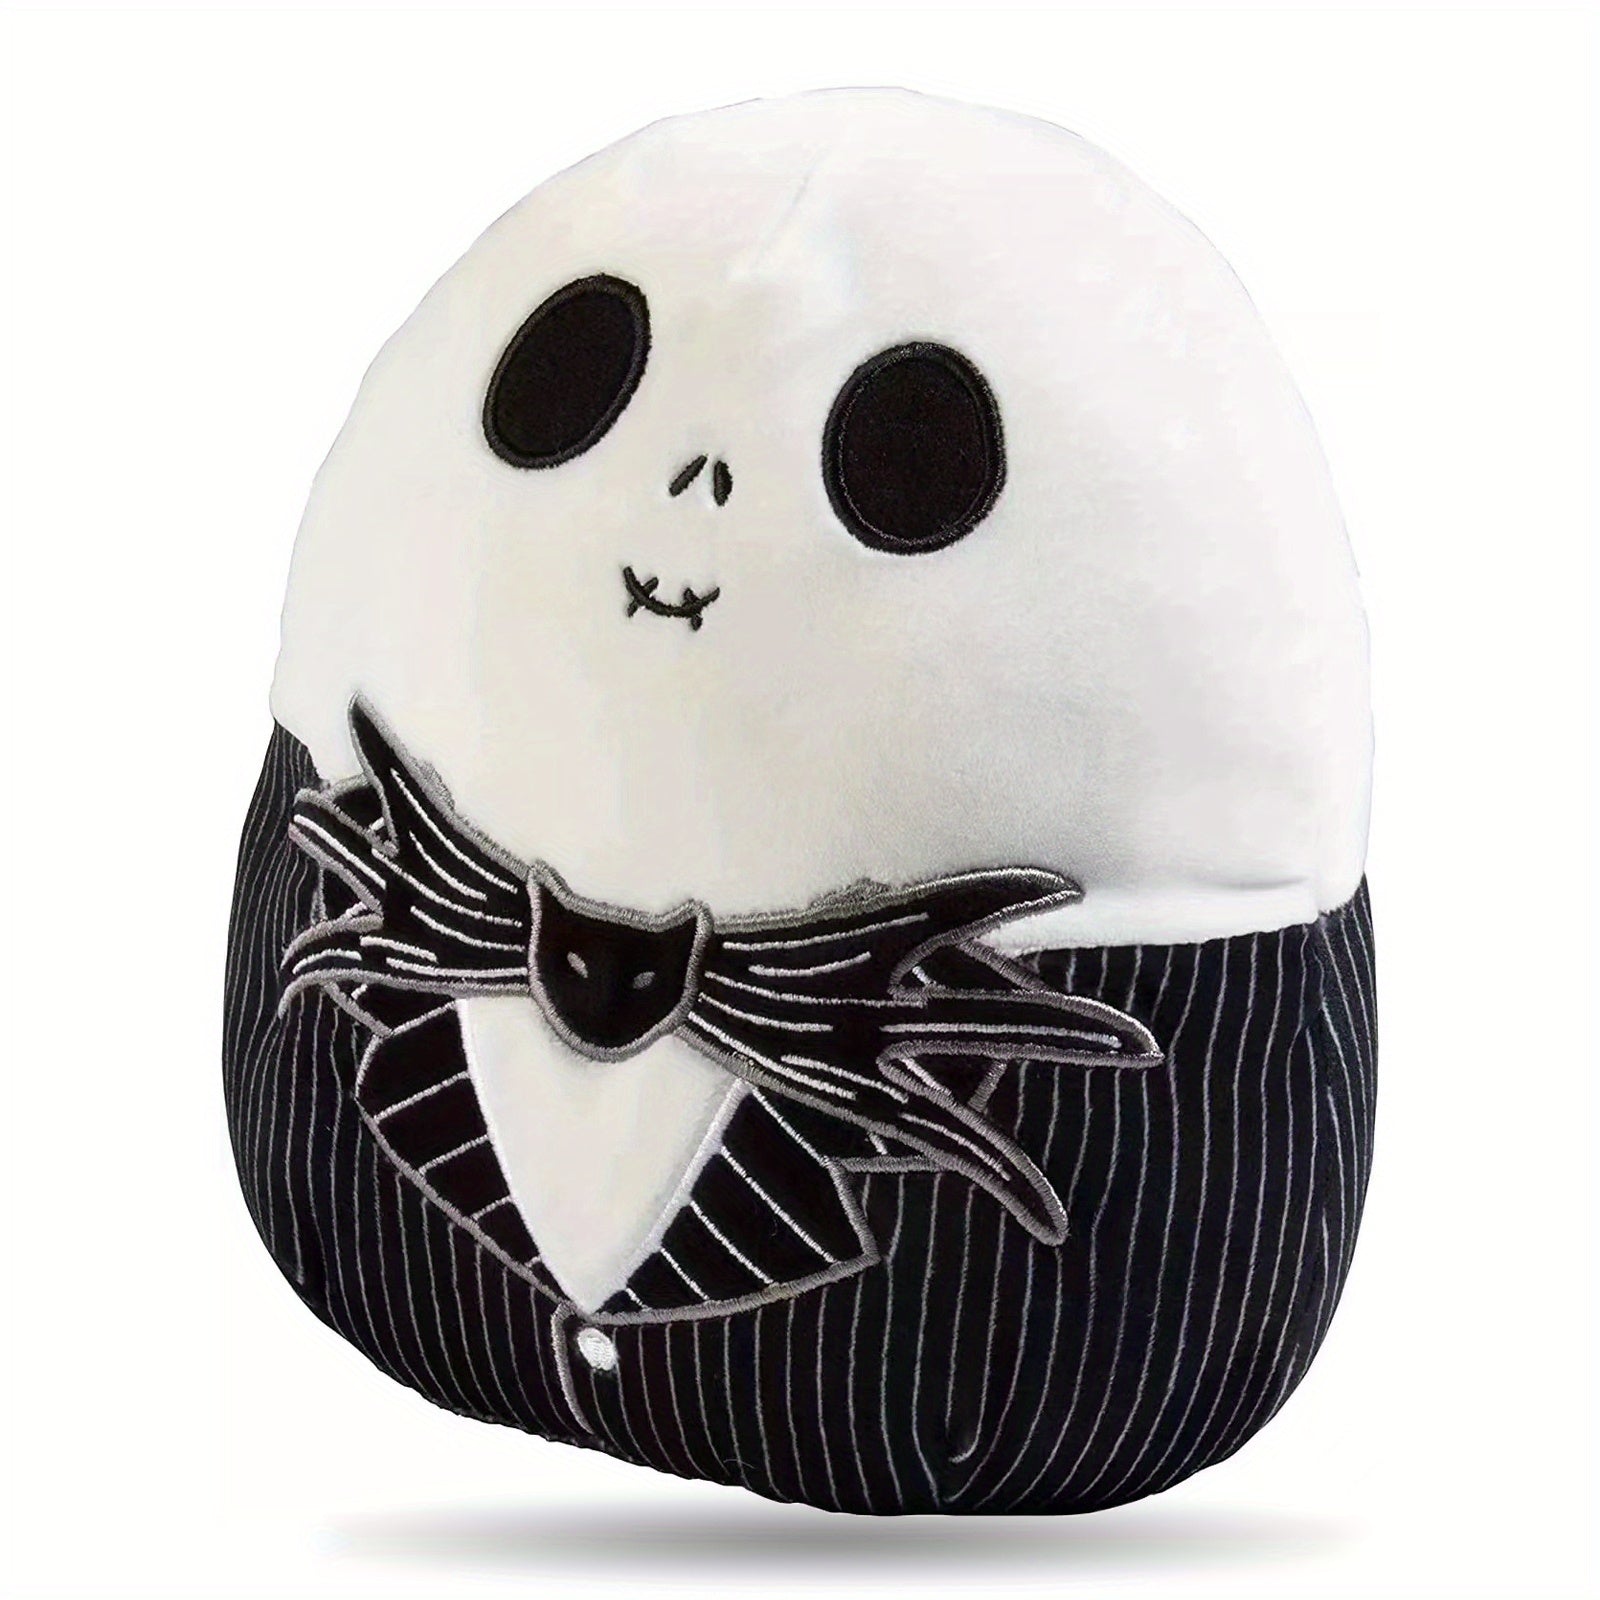 Cuddly Jack Plush-Soft Stuffed Animal Toy - Perfect Gift For Kids On Birthdays & Halloween! Cykapu